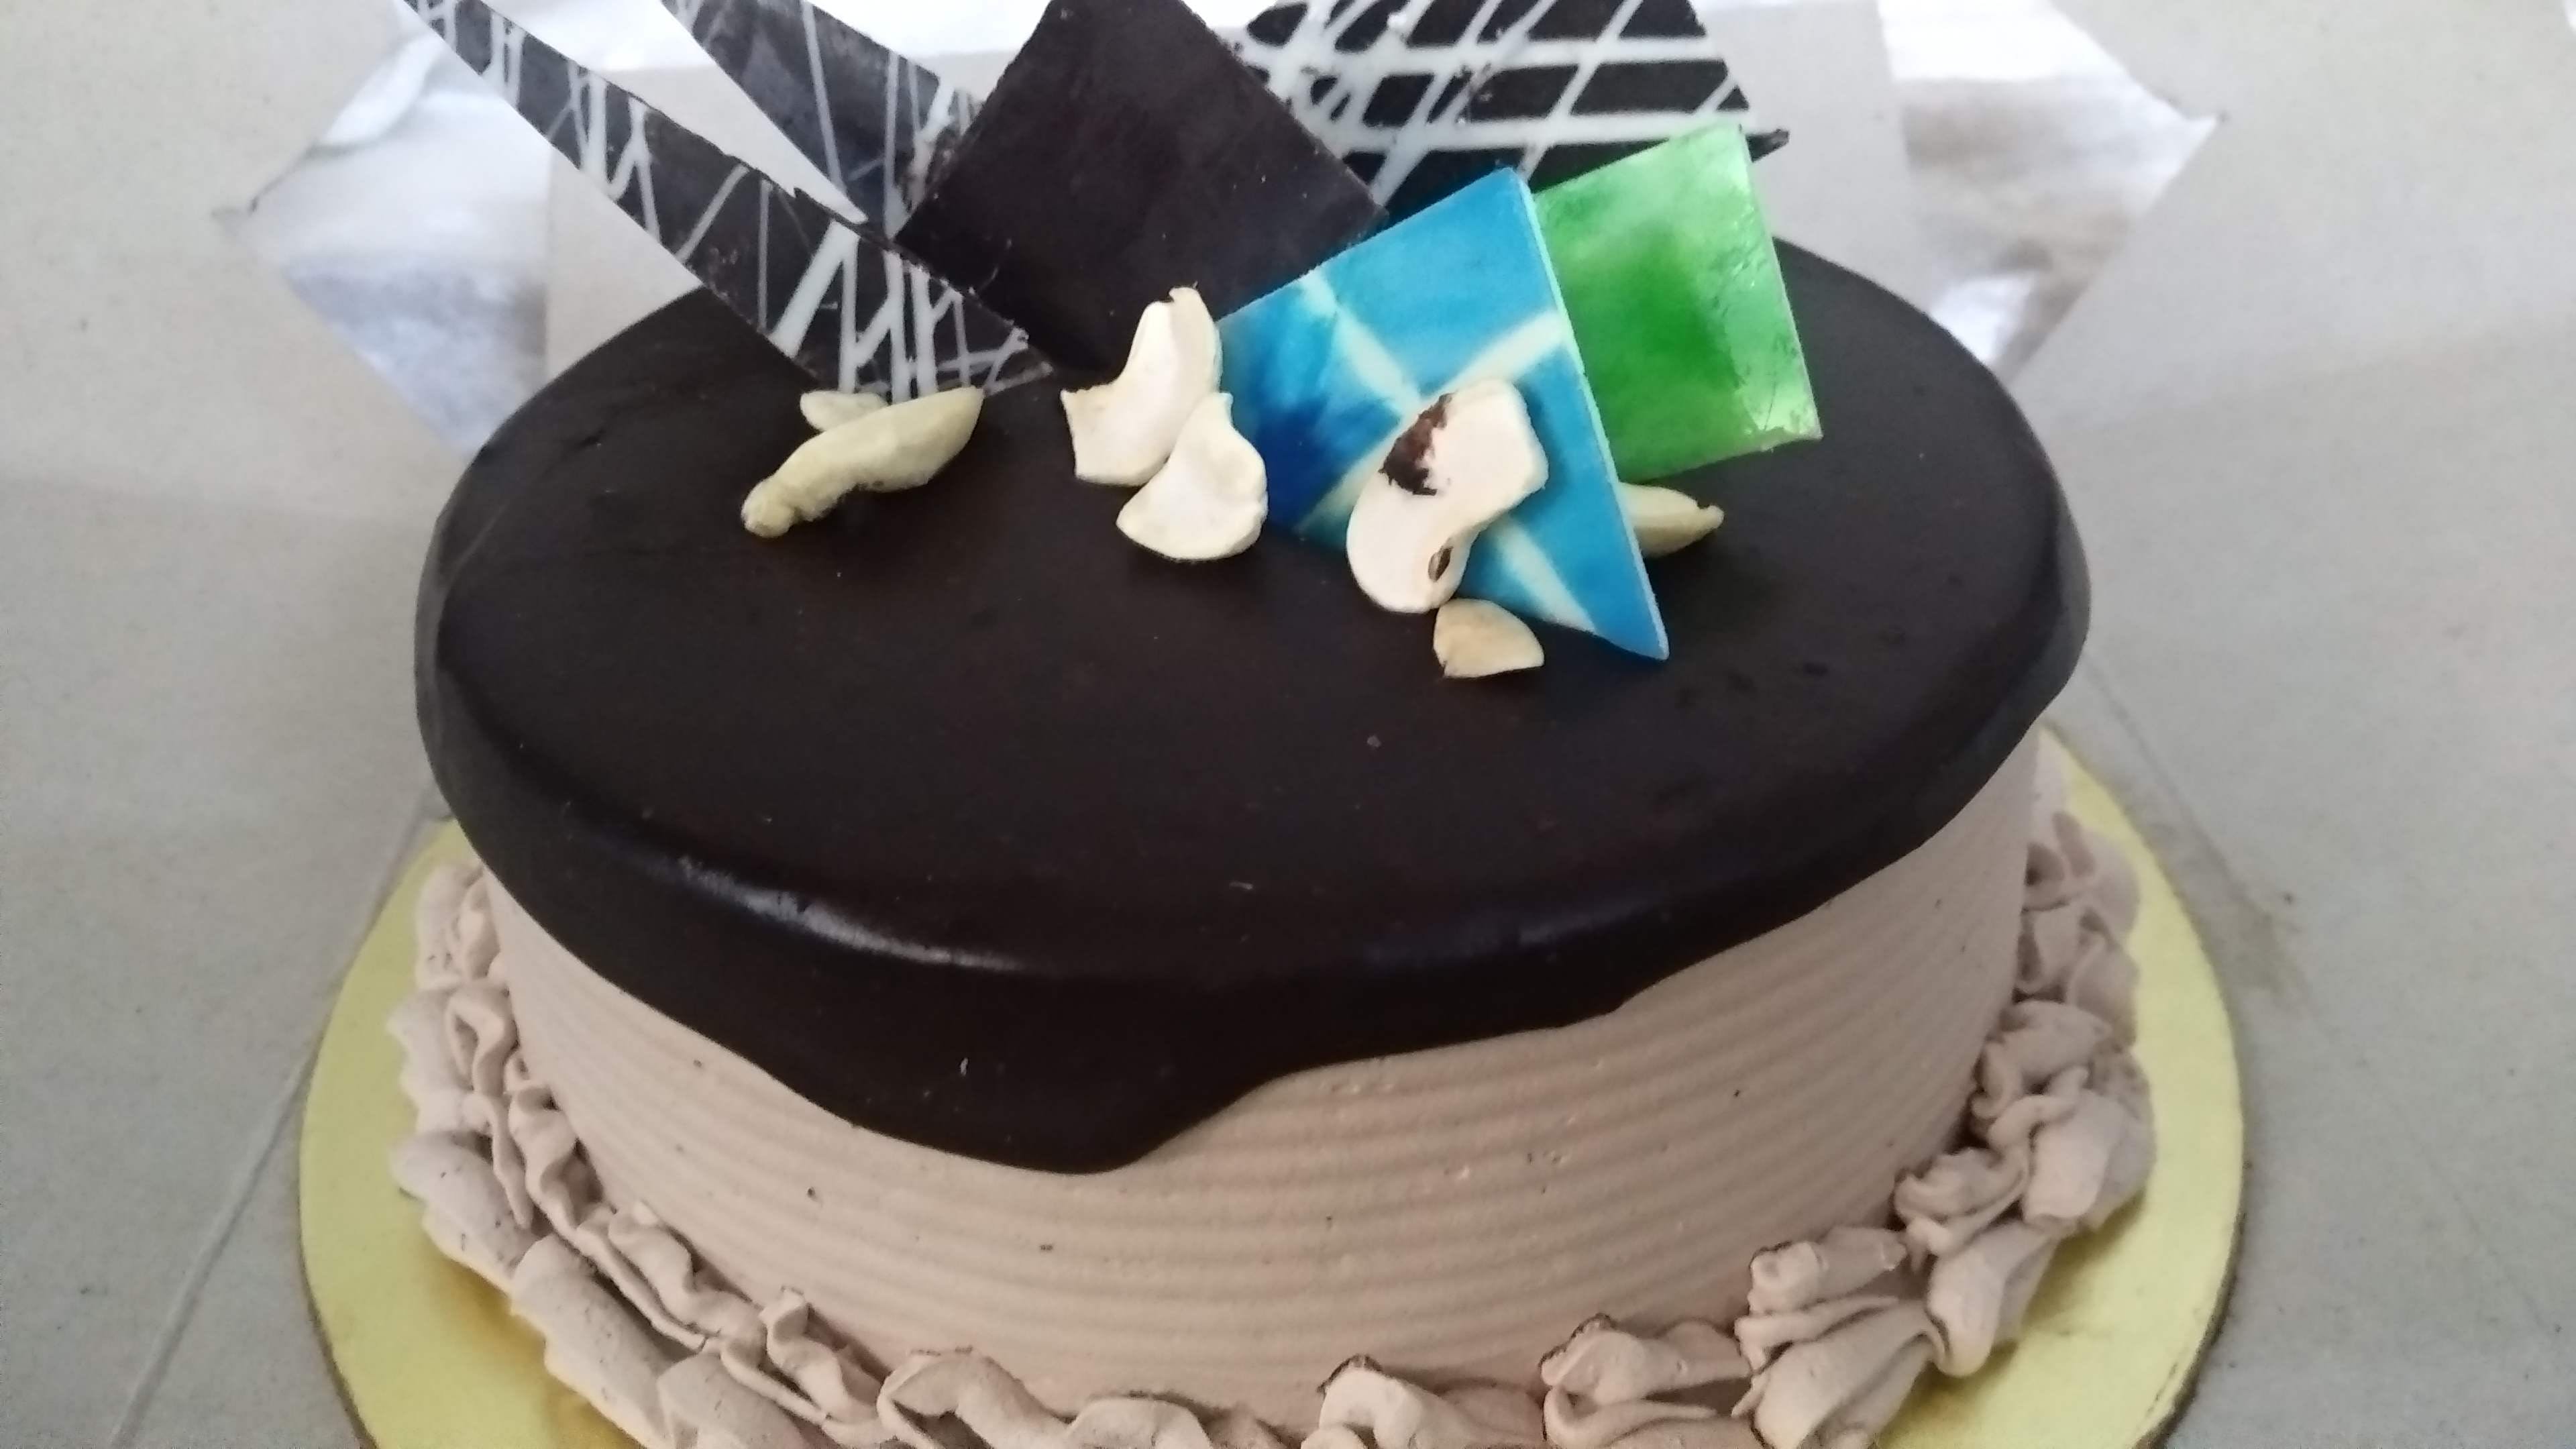 Cake,Cake decorating,Sugar paste,Fondant,Food,Buttercream,Birthday cake,Torte,Icing,Dessert